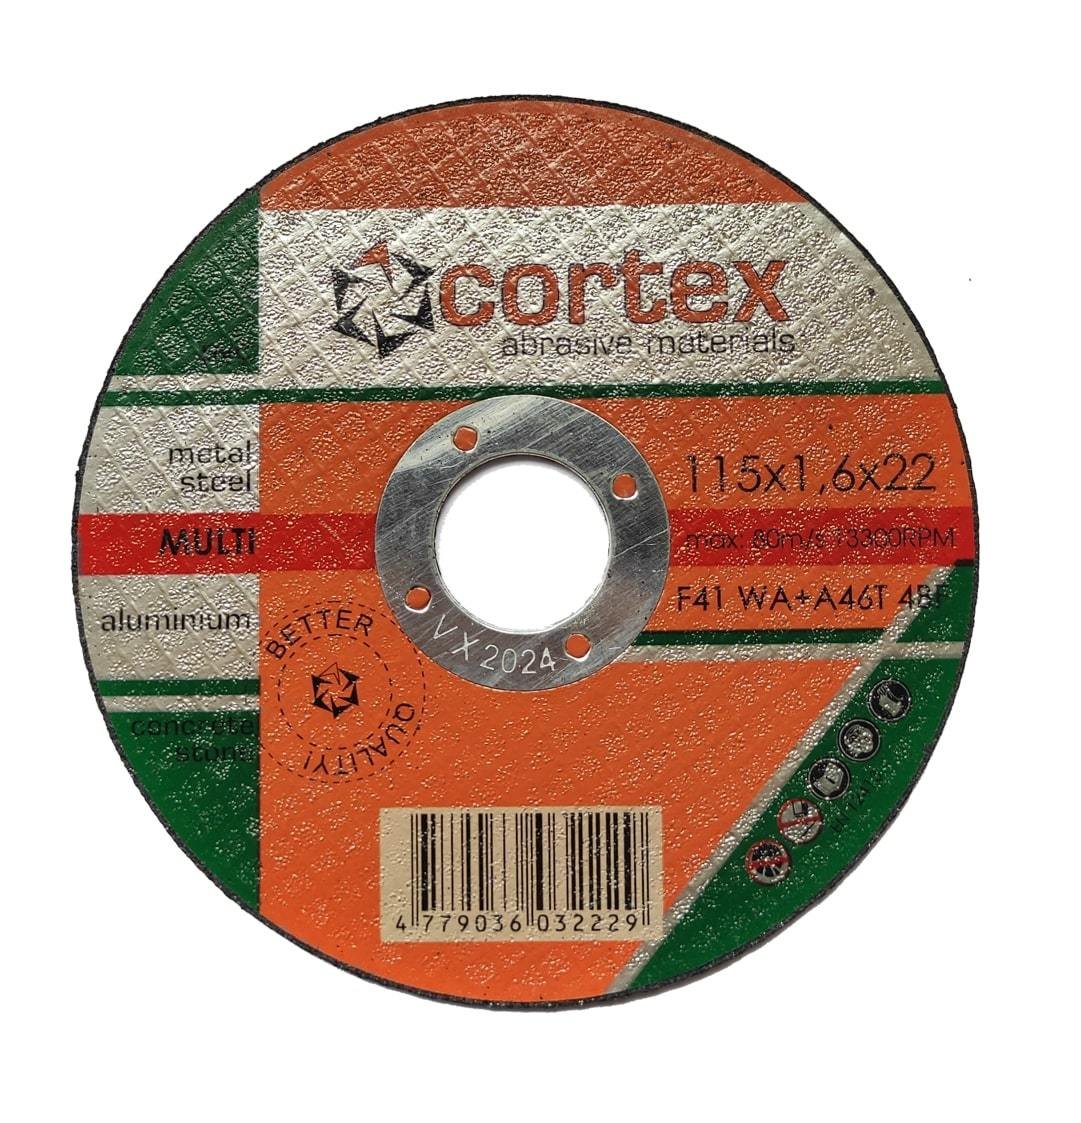 Universalus pjovimo diskas CORTEX, 115 x 1,6 x 22 mm, metalui, betonui